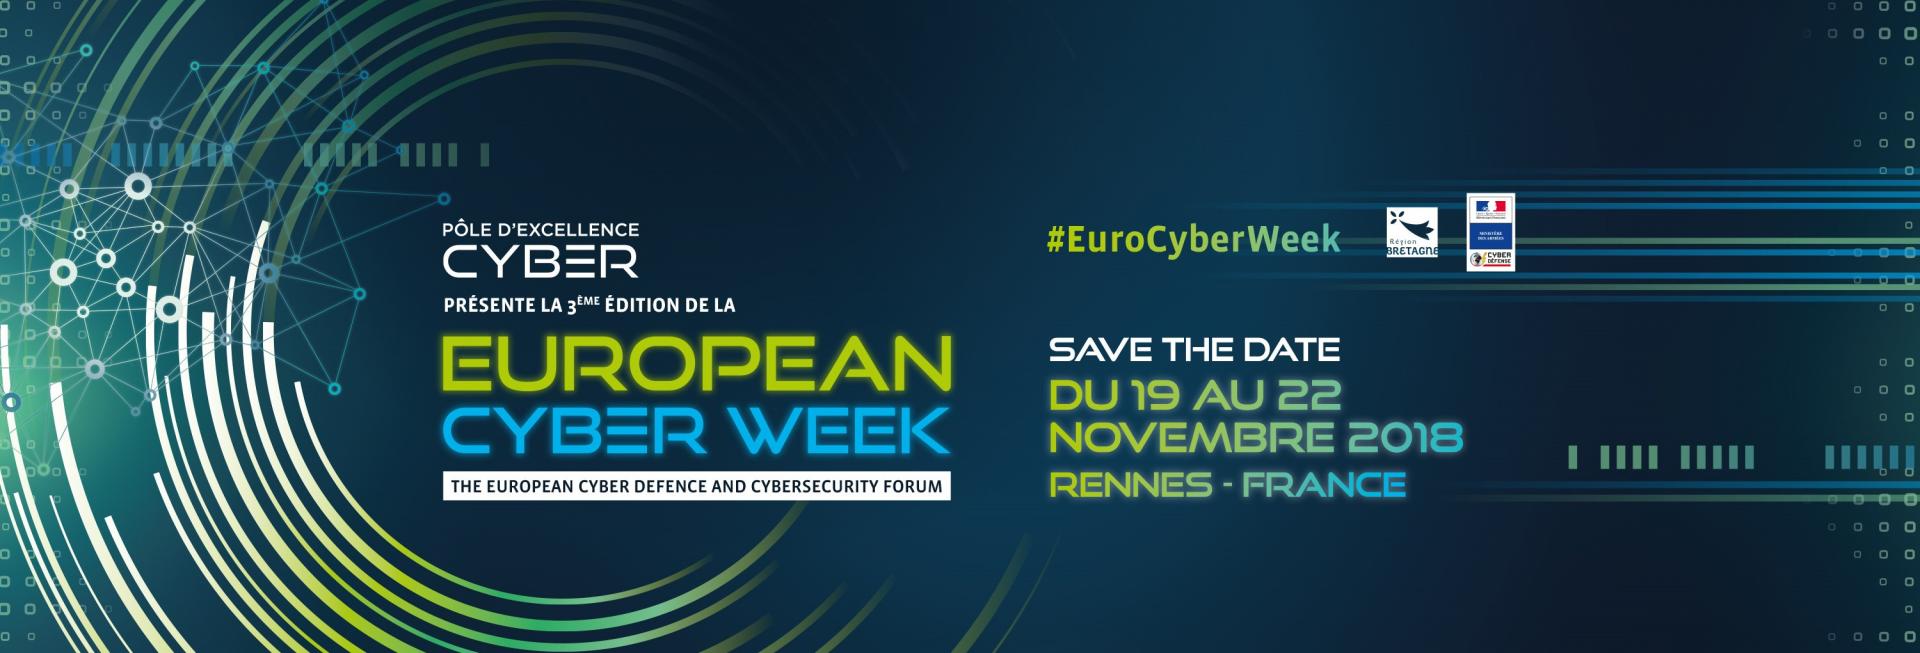 Banner European Cyber Week 2018